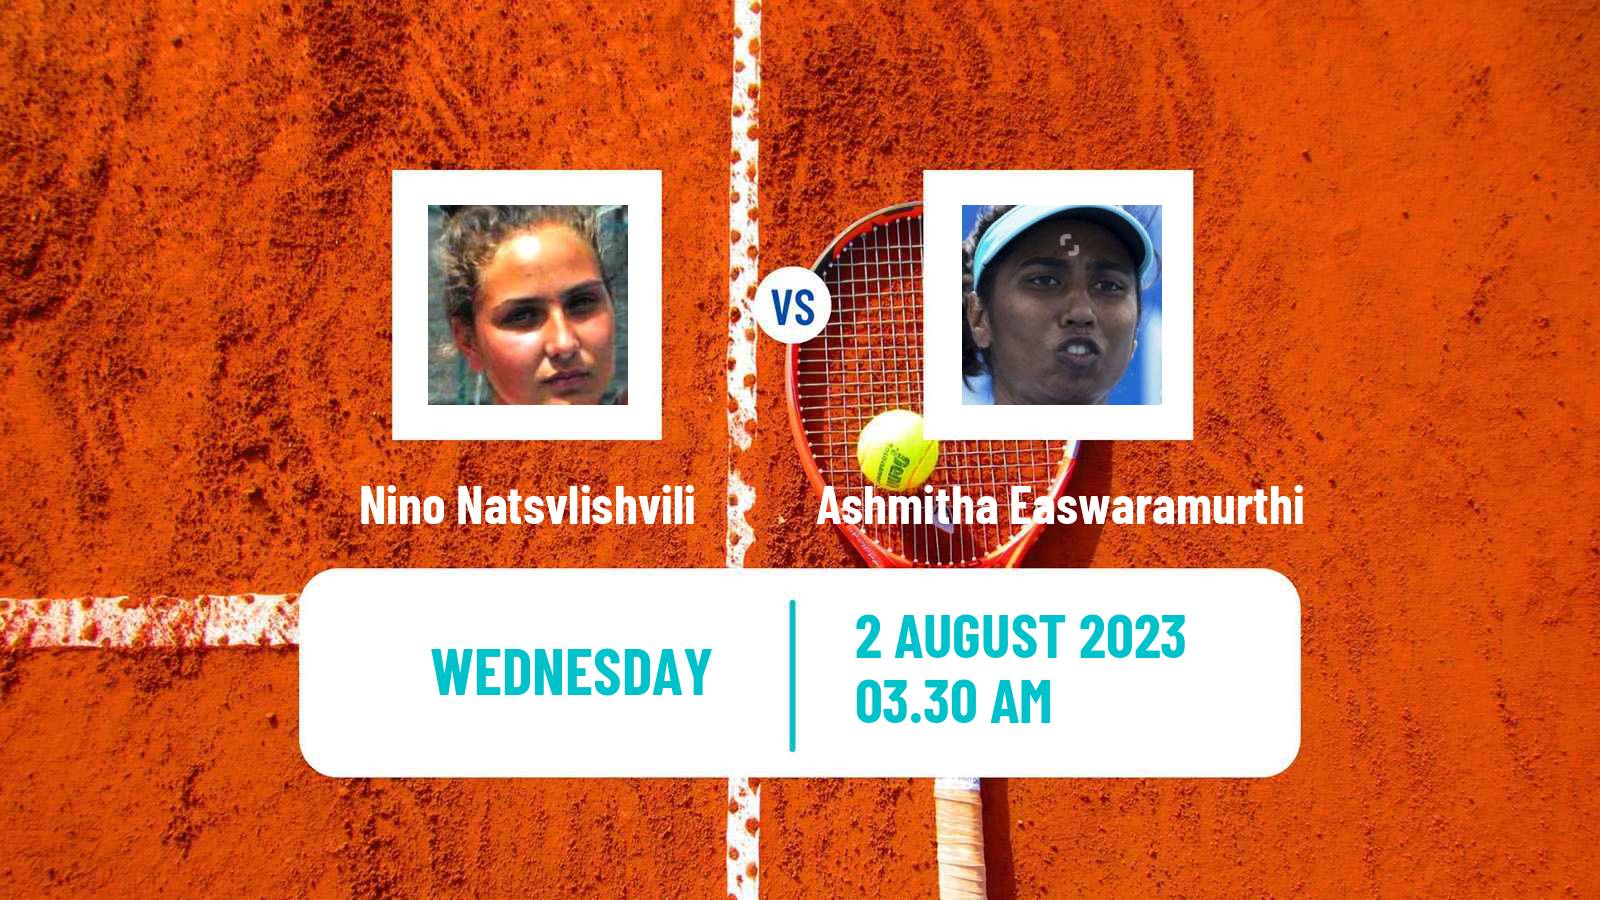 Tennis ITF W15 Tbilisi Women Nino Natsvlishvili - Ashmitha Easwaramurthi